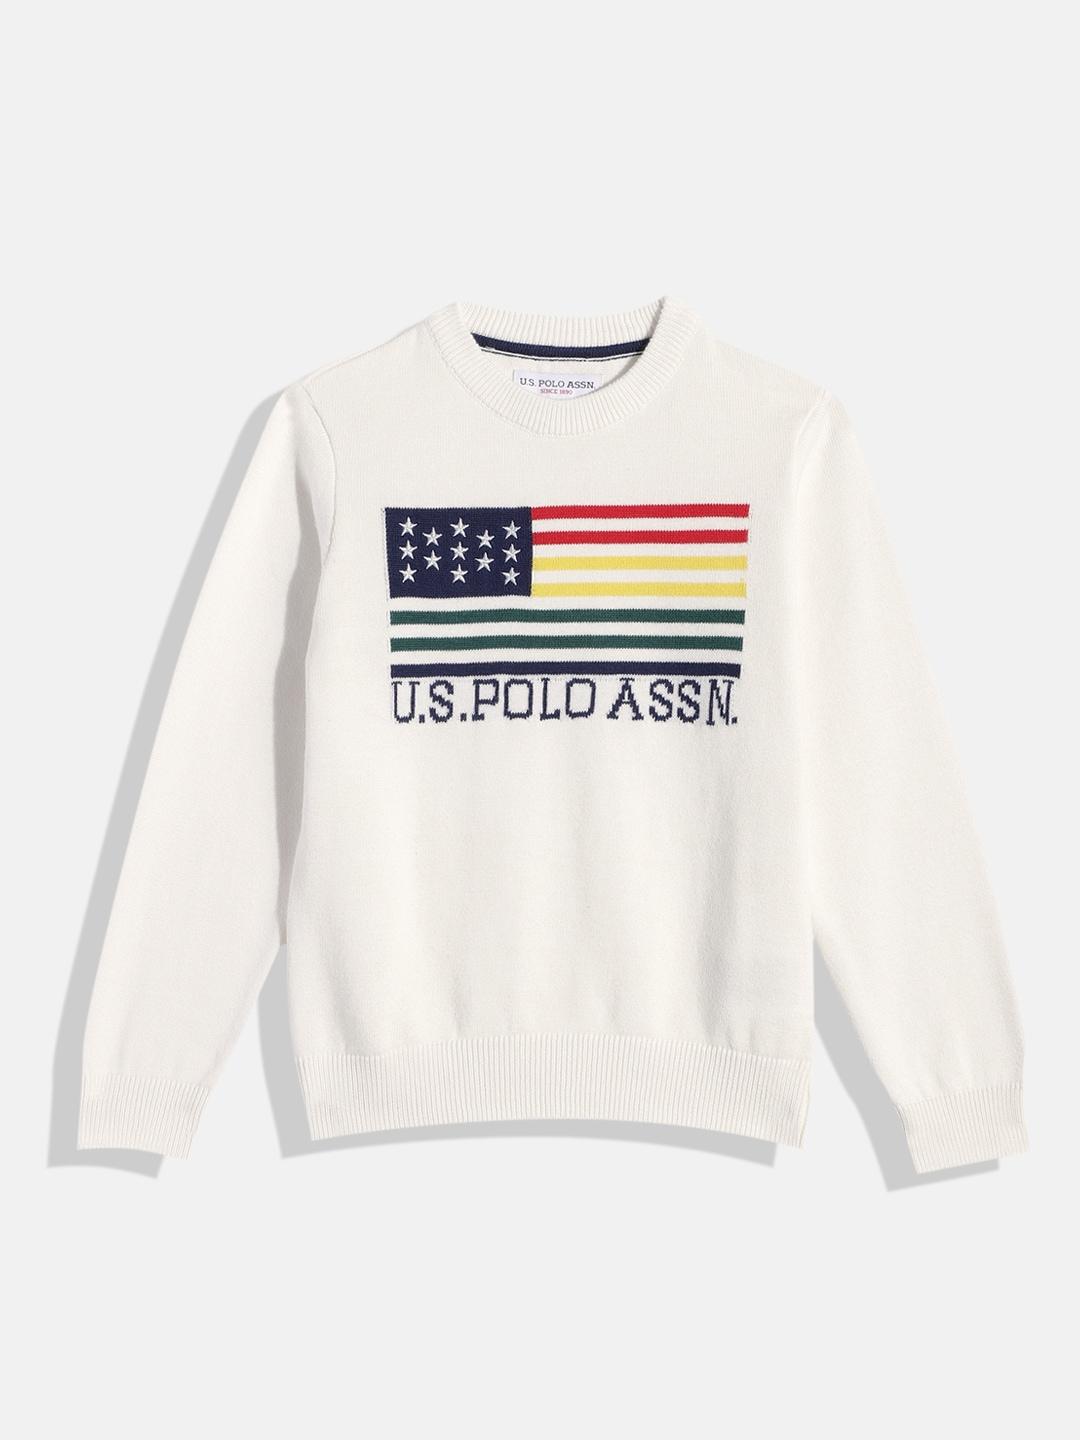 u.s. polo assn. kids boys white brand logo print pure cotton pullover